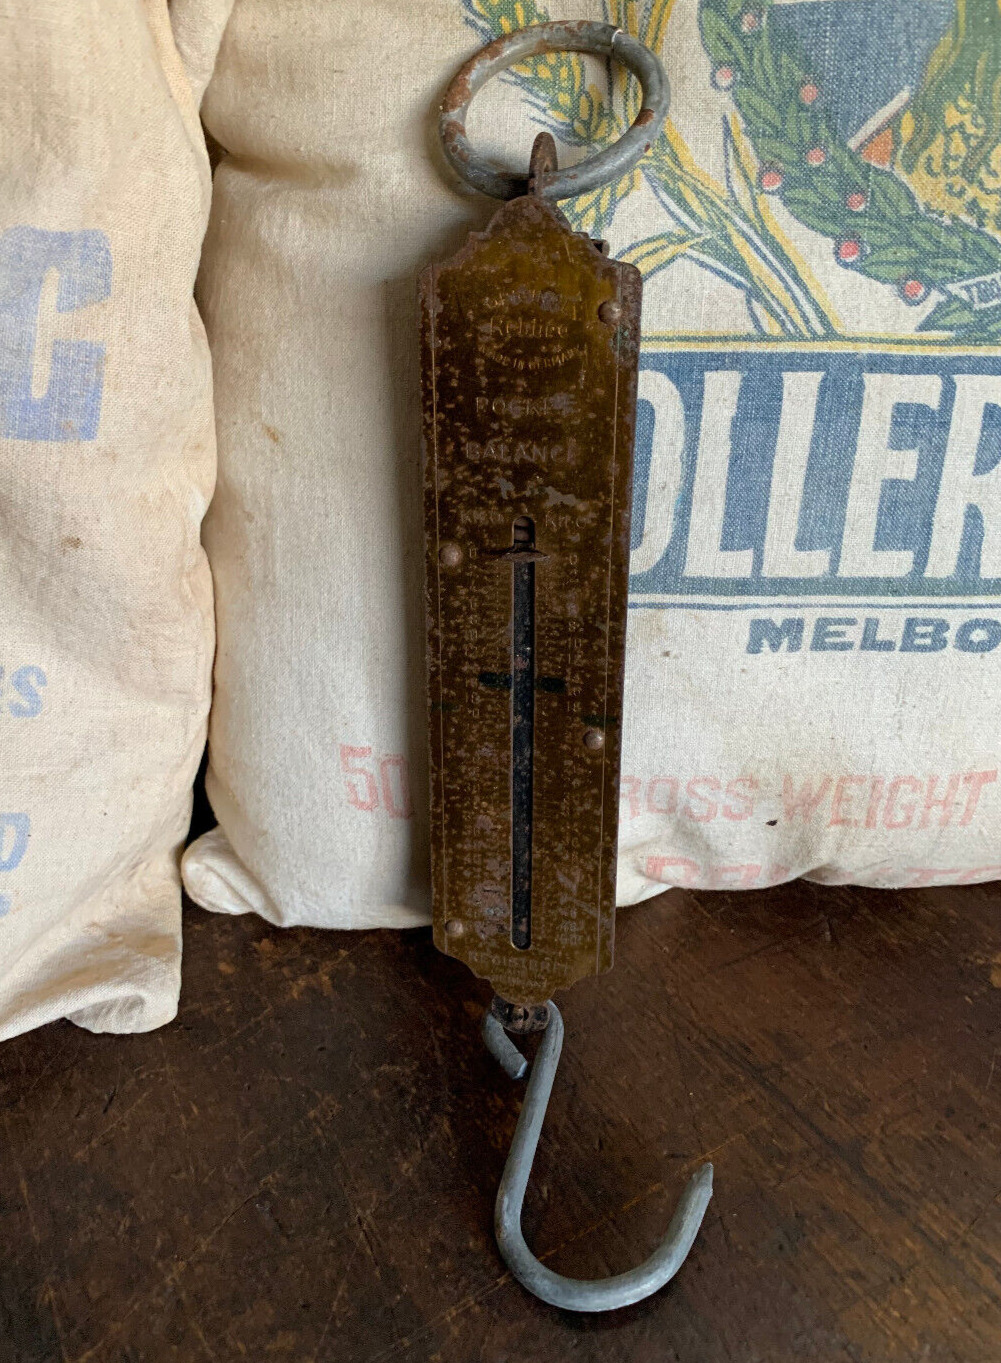 Antique Original Rebure Spring Pocket Balance Scales. Made in Germany